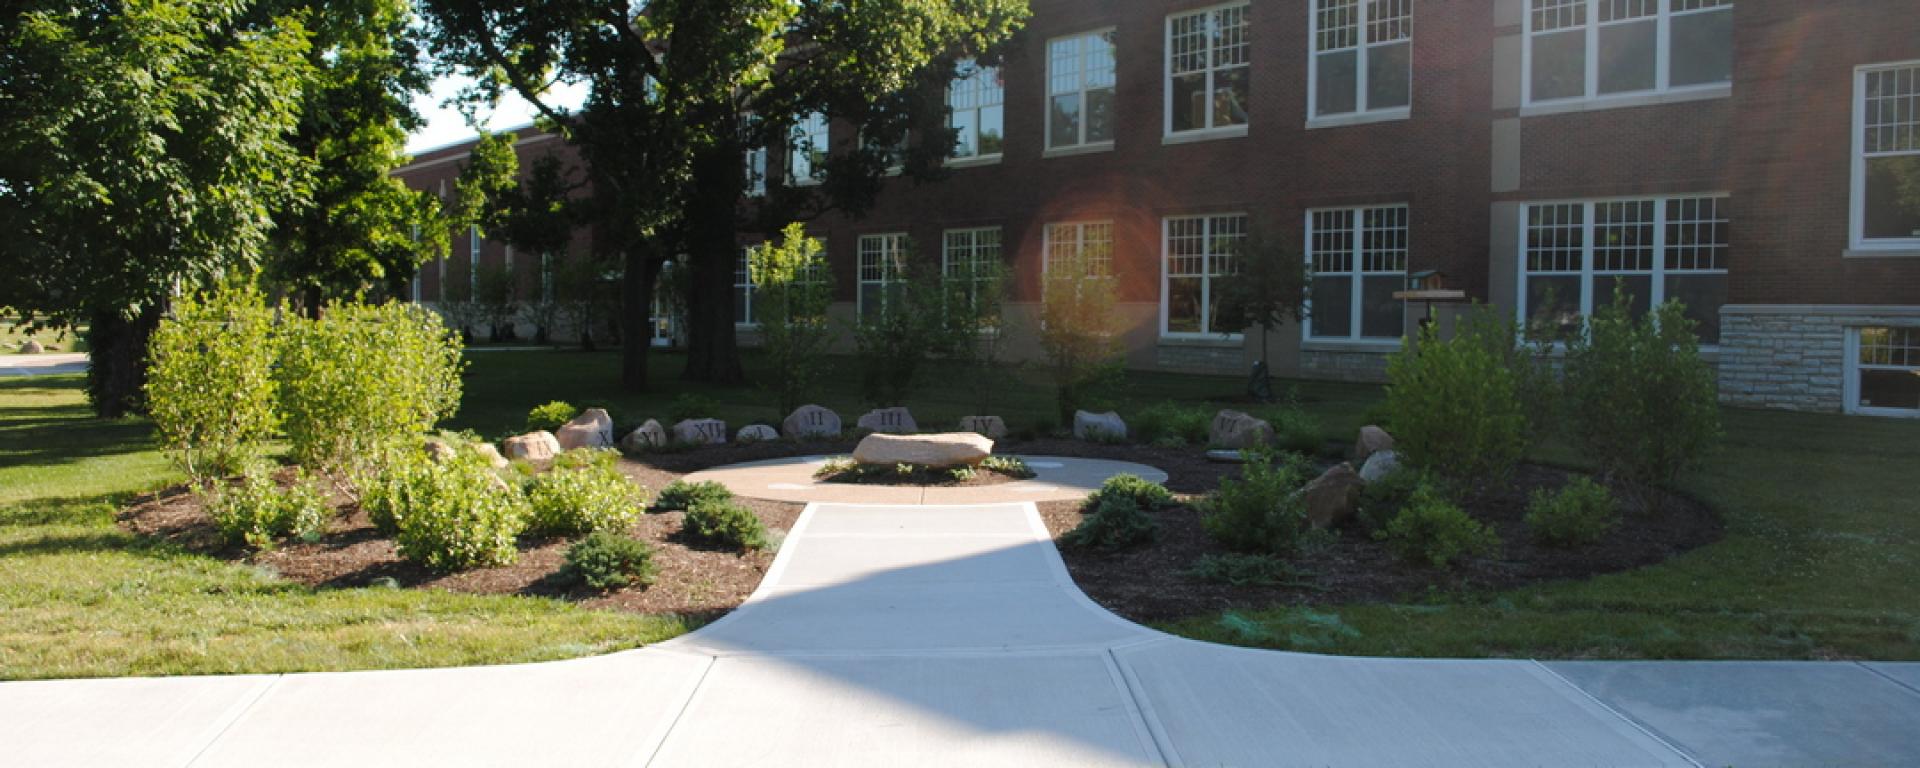 landscaping outside of school